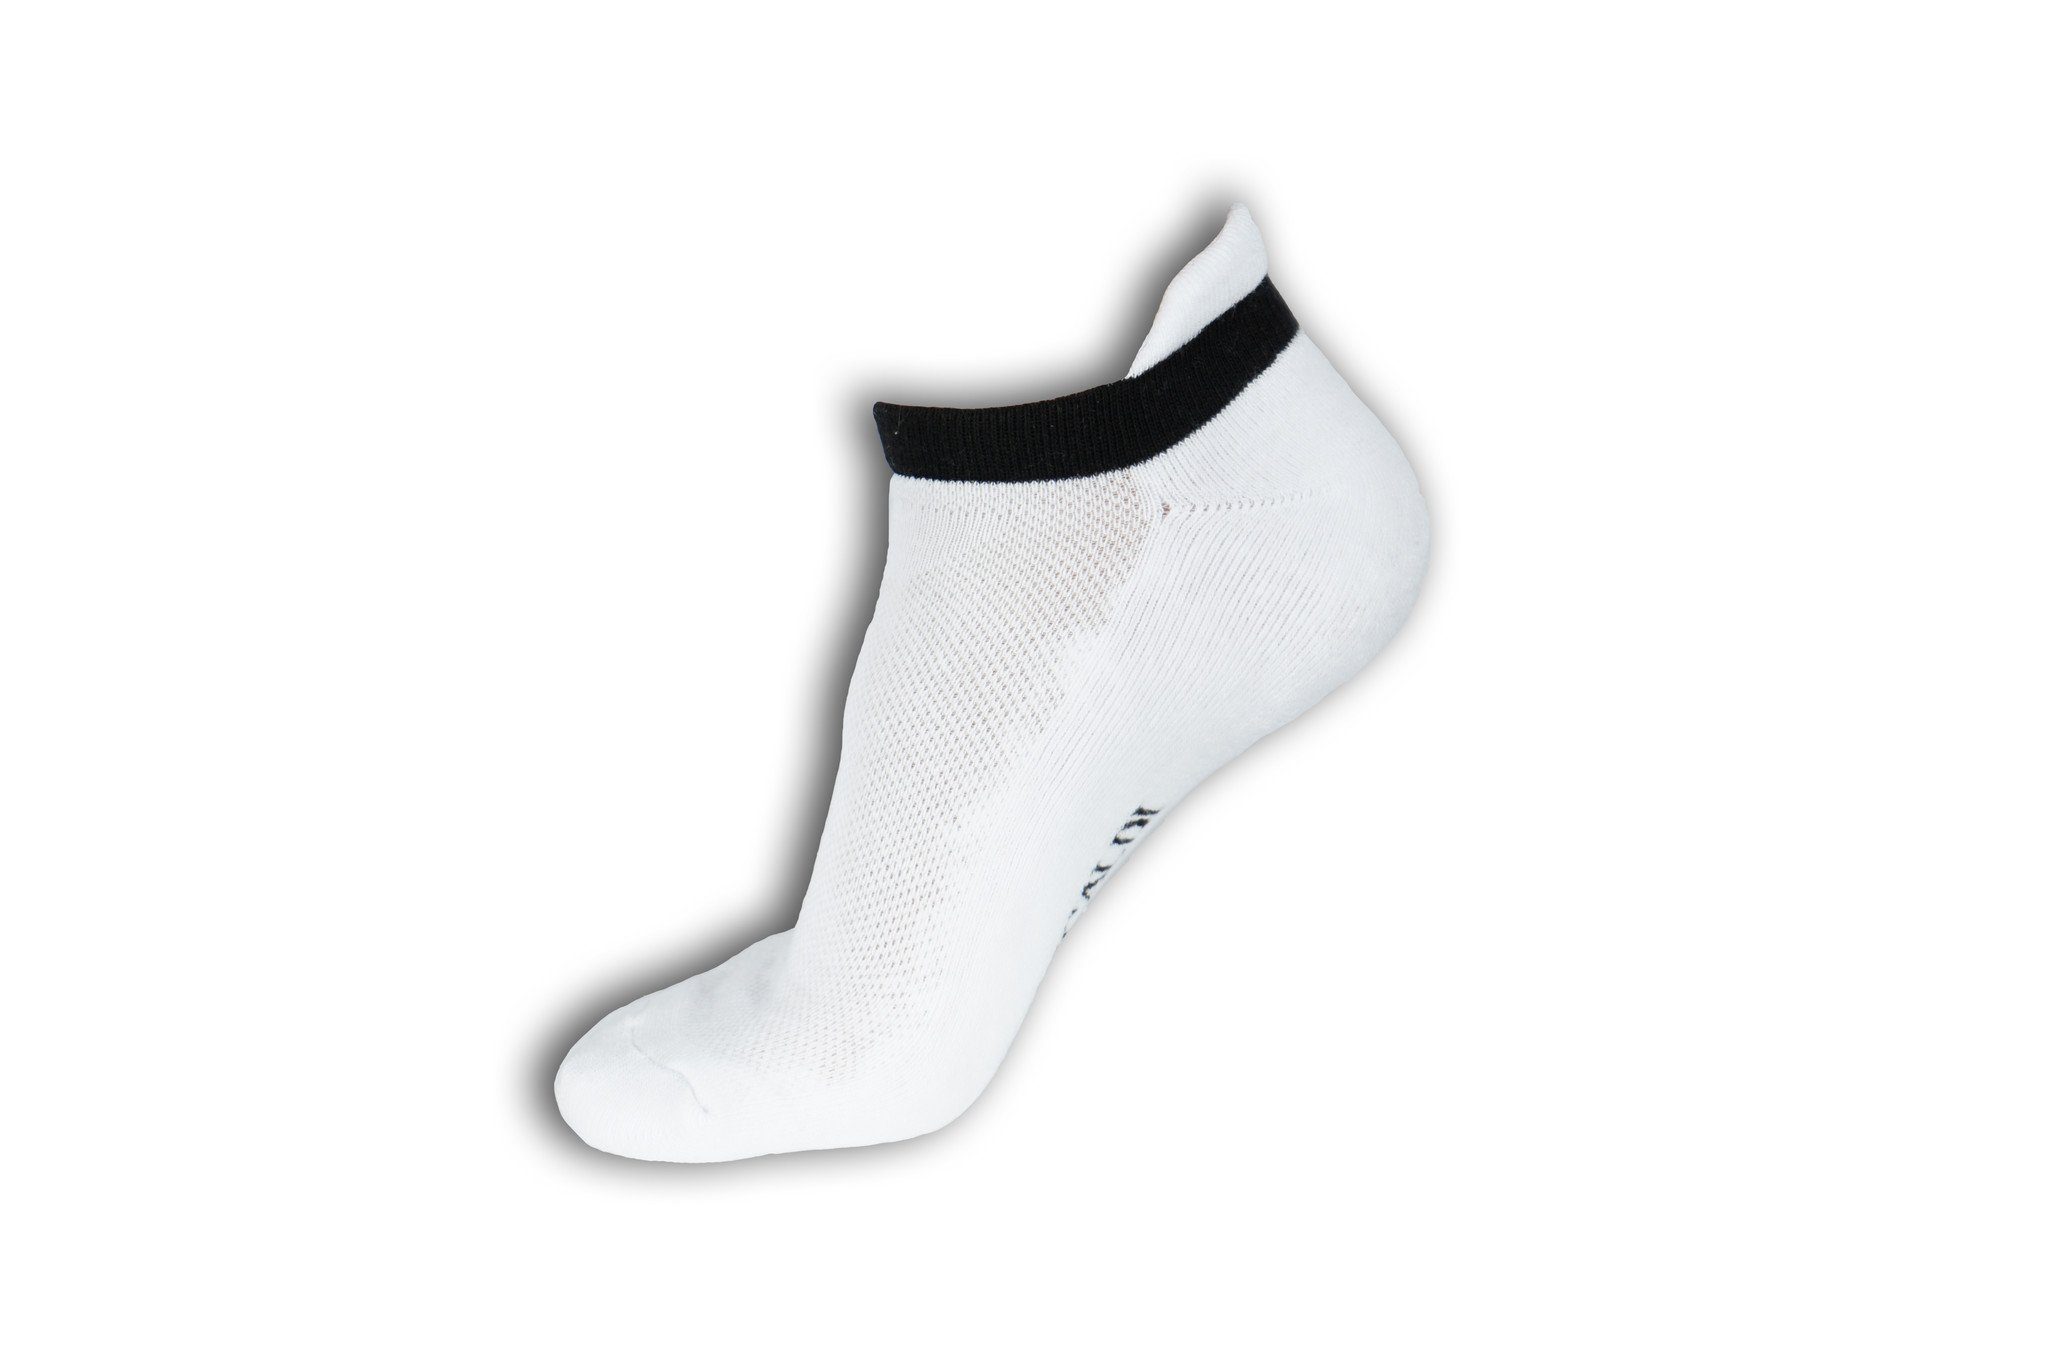 Socken Weiß Set 5er Jeans - pack) Socken LIGHT PICALDI 5 (Beutel,